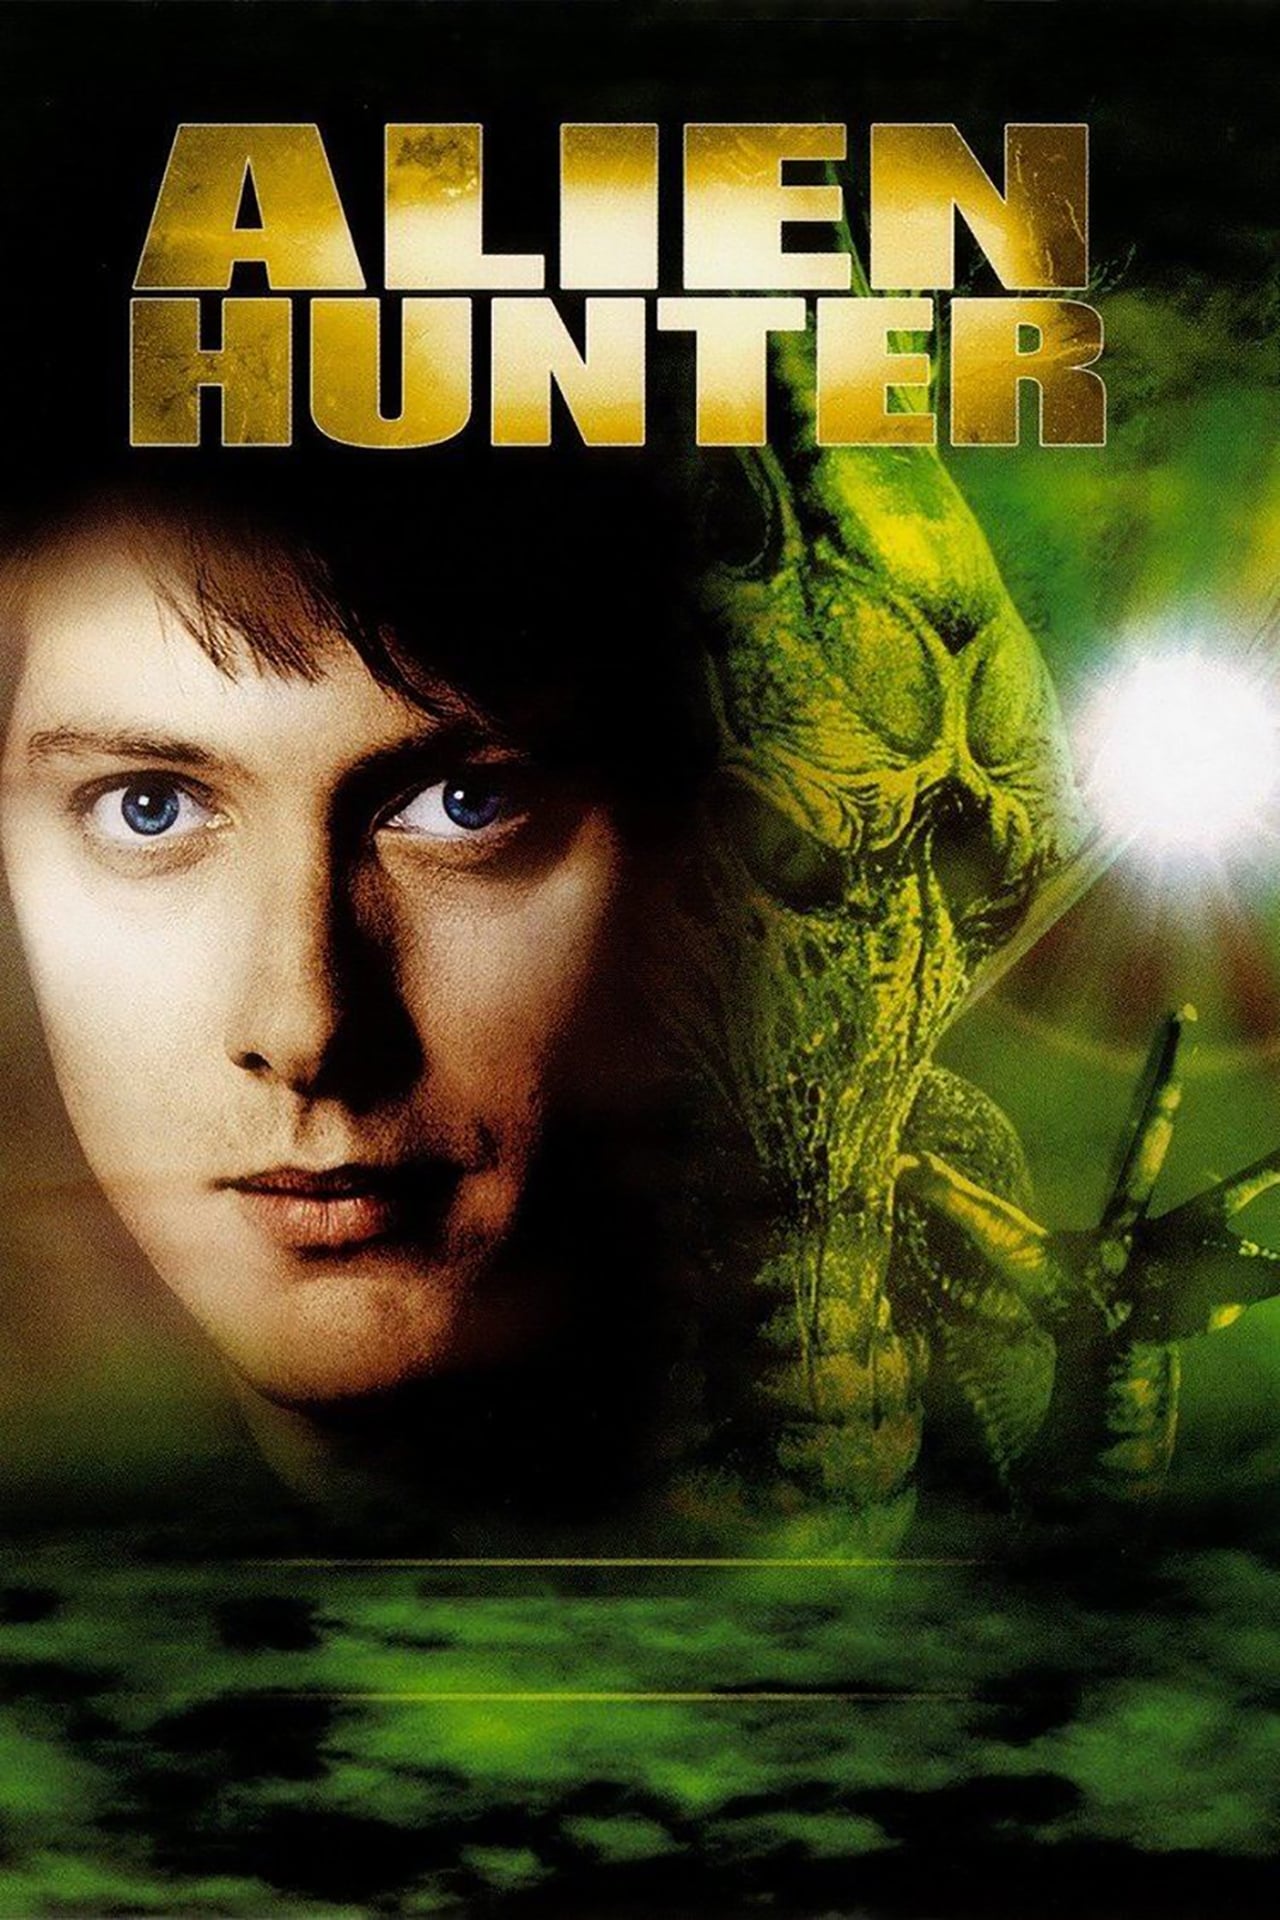 movie review of alien hunter